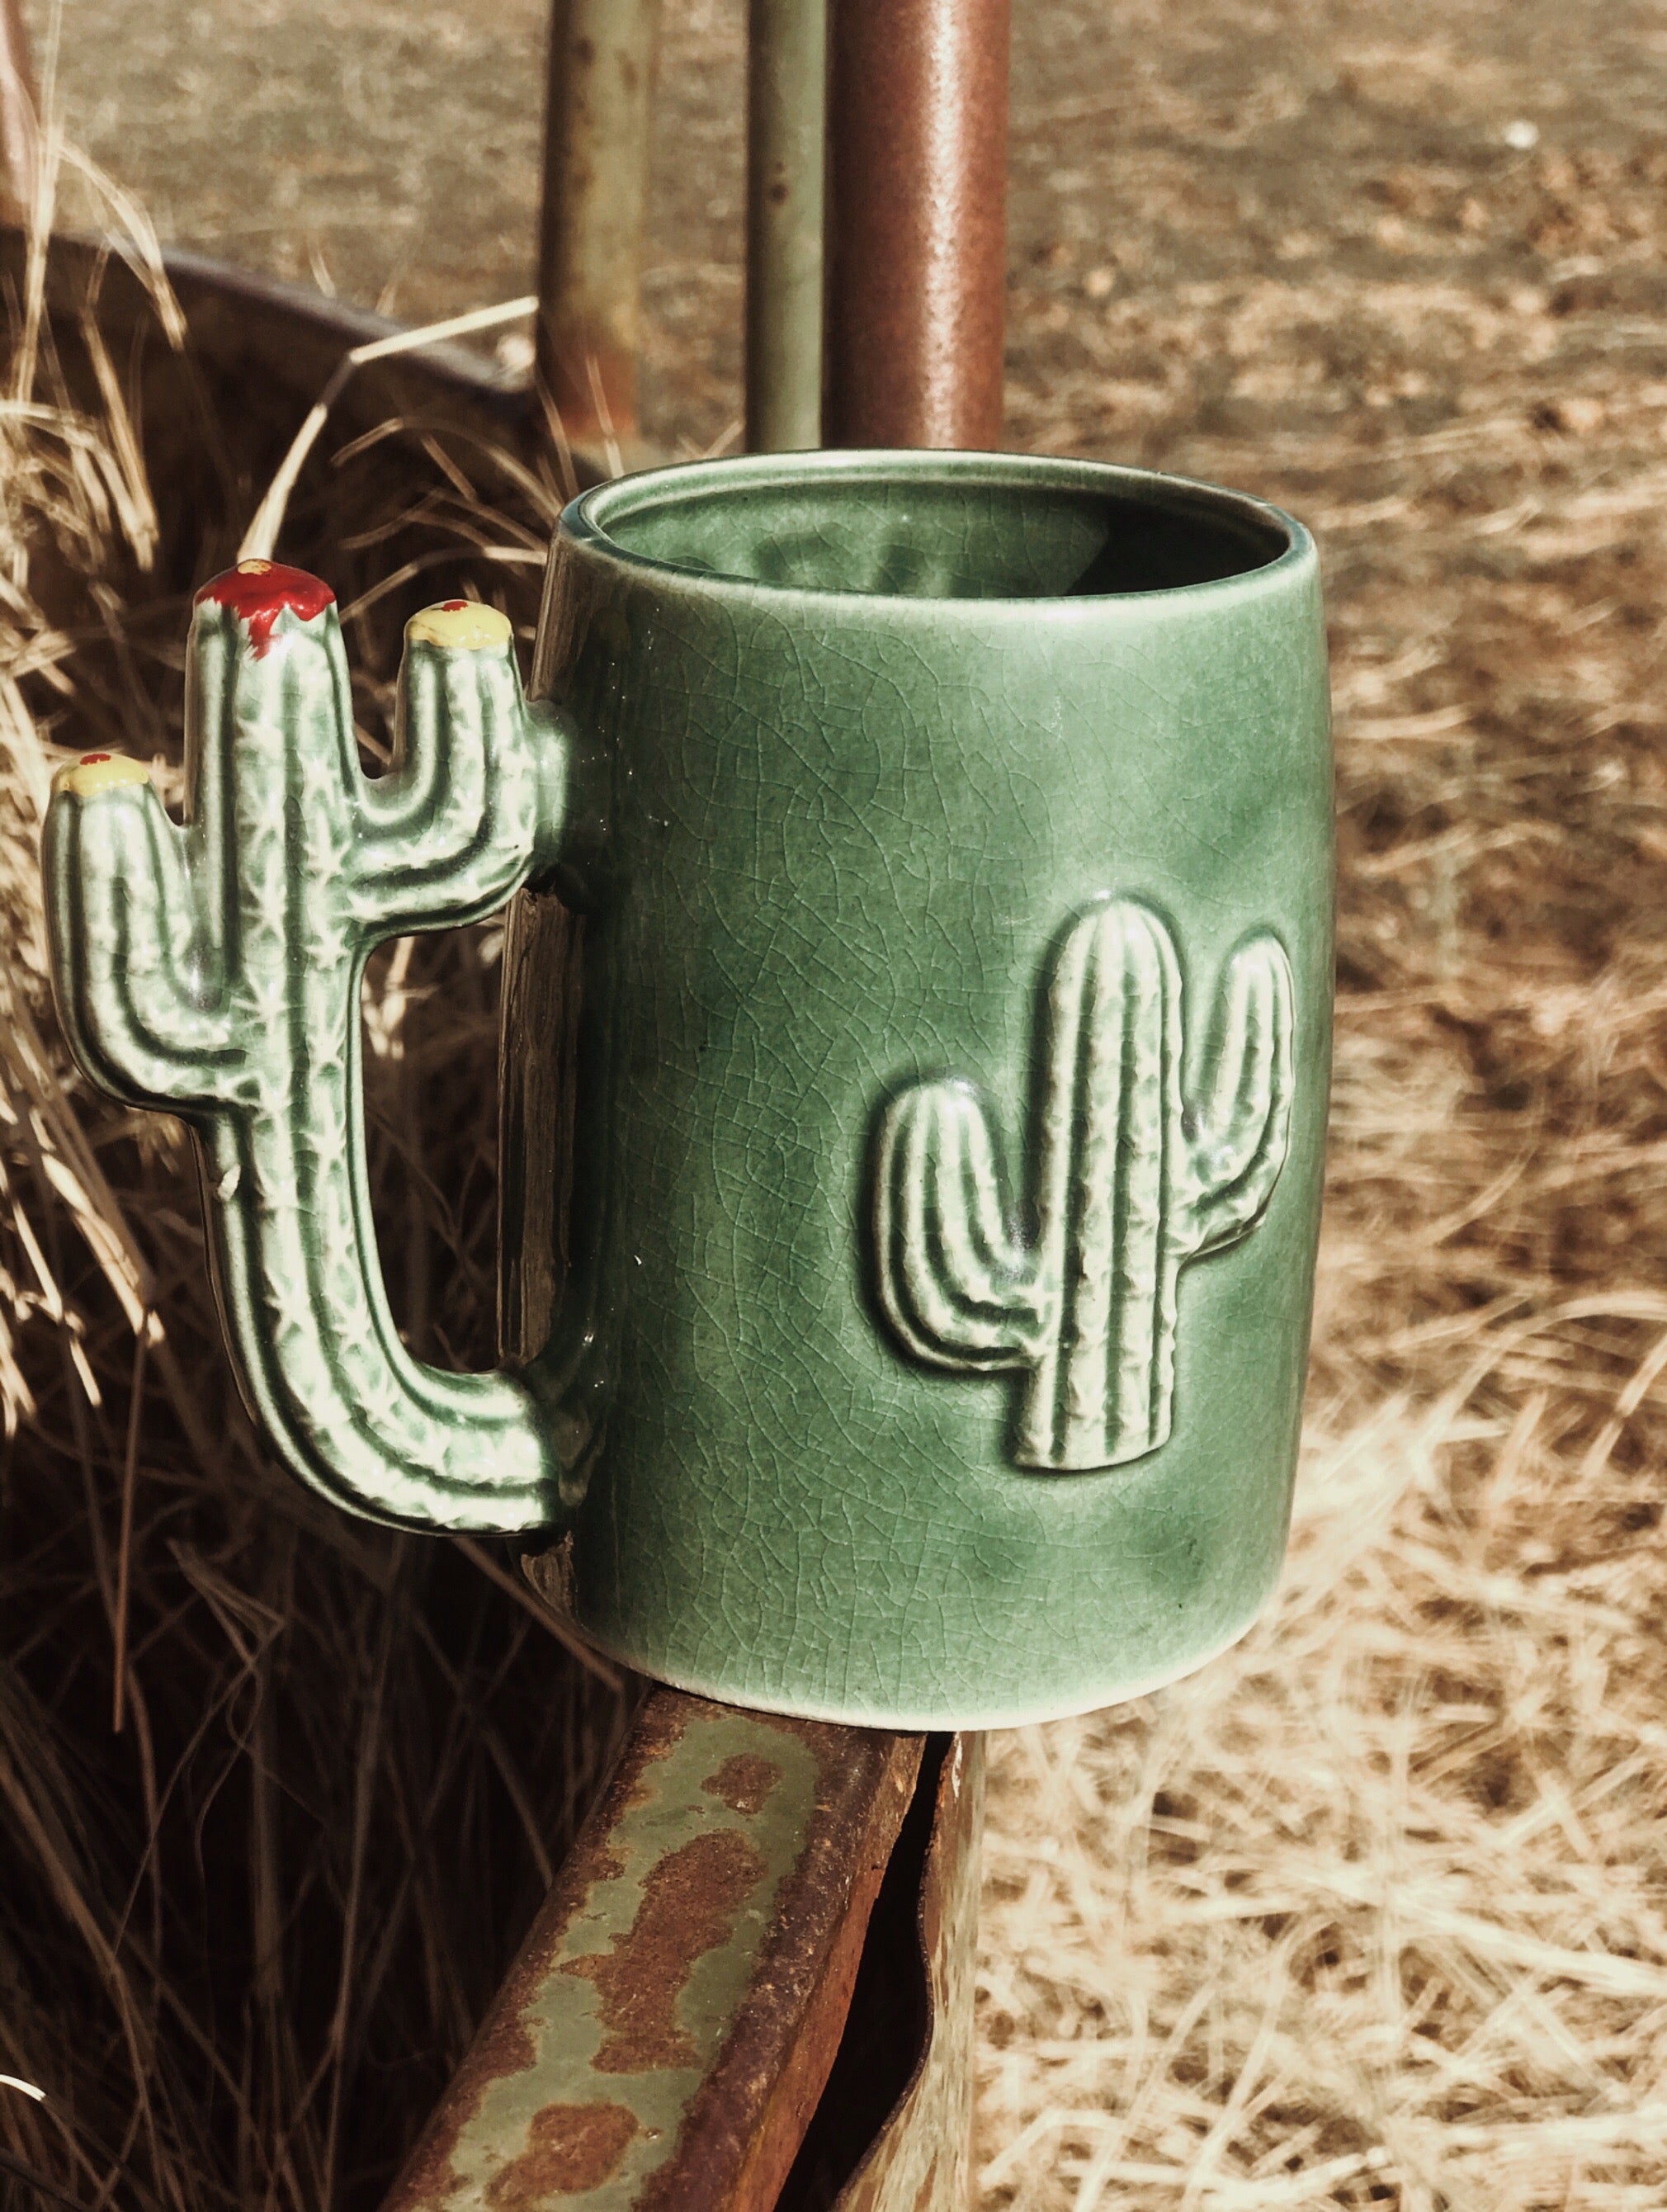 Vintage Souvenir Mug from Arizona